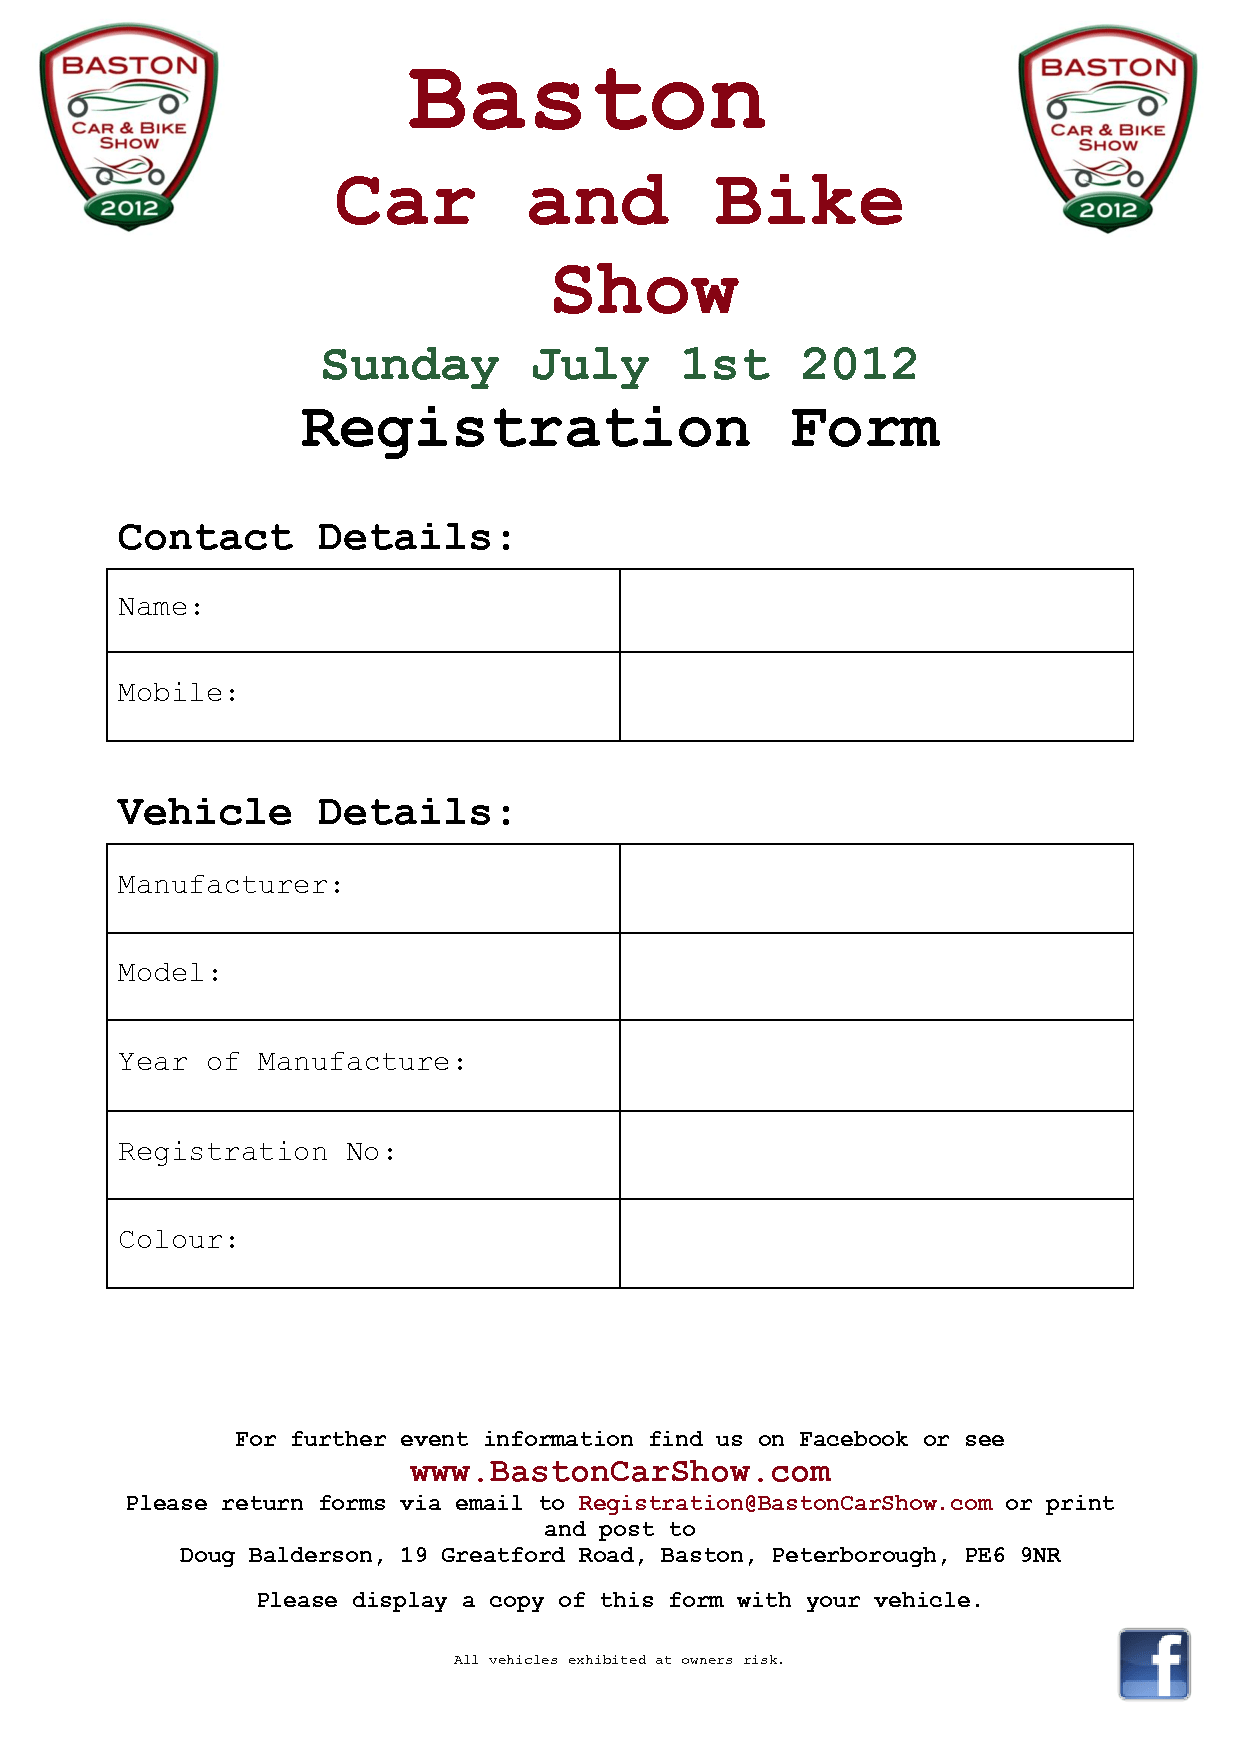 8-car-show-registration-form-templates-word-excel-samples